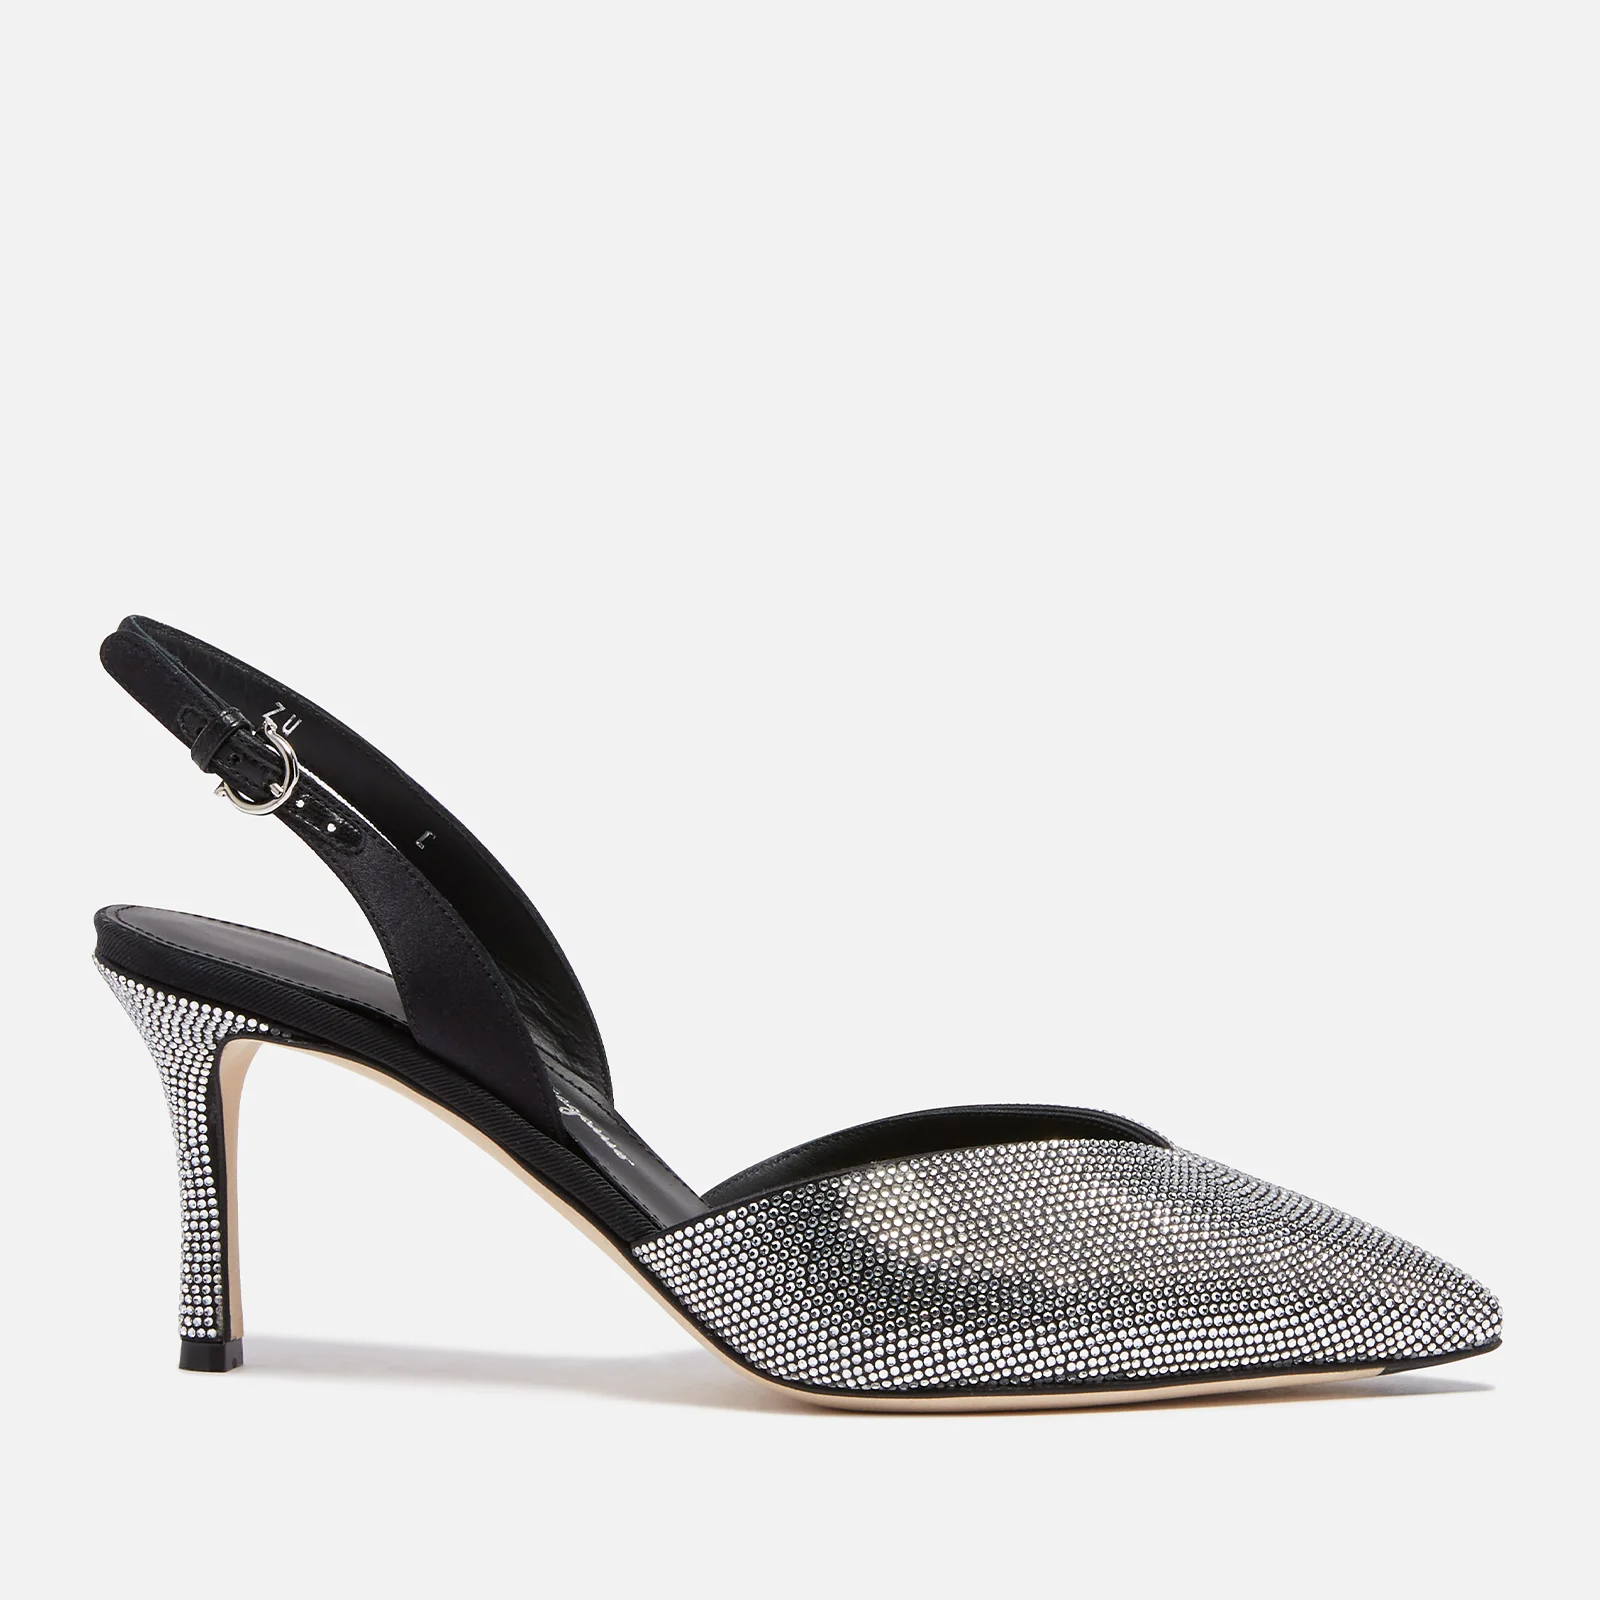 Salvatore Ferragamo Women's Ileen 70 T Sling Back Court Shoes - Nero Image 1